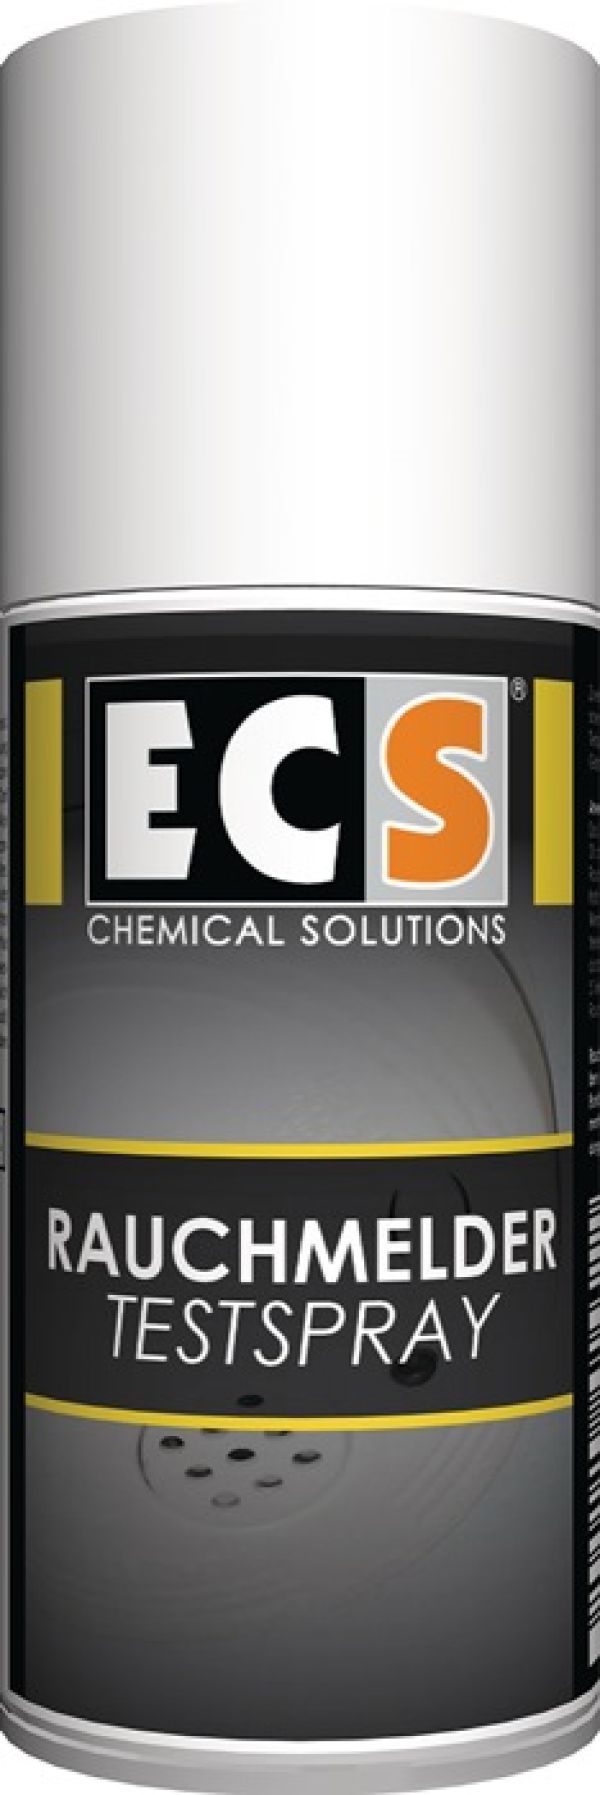 Rauchmeldertestspray 150ml Spraydose ECS CHEMICAL SOLUTIONS